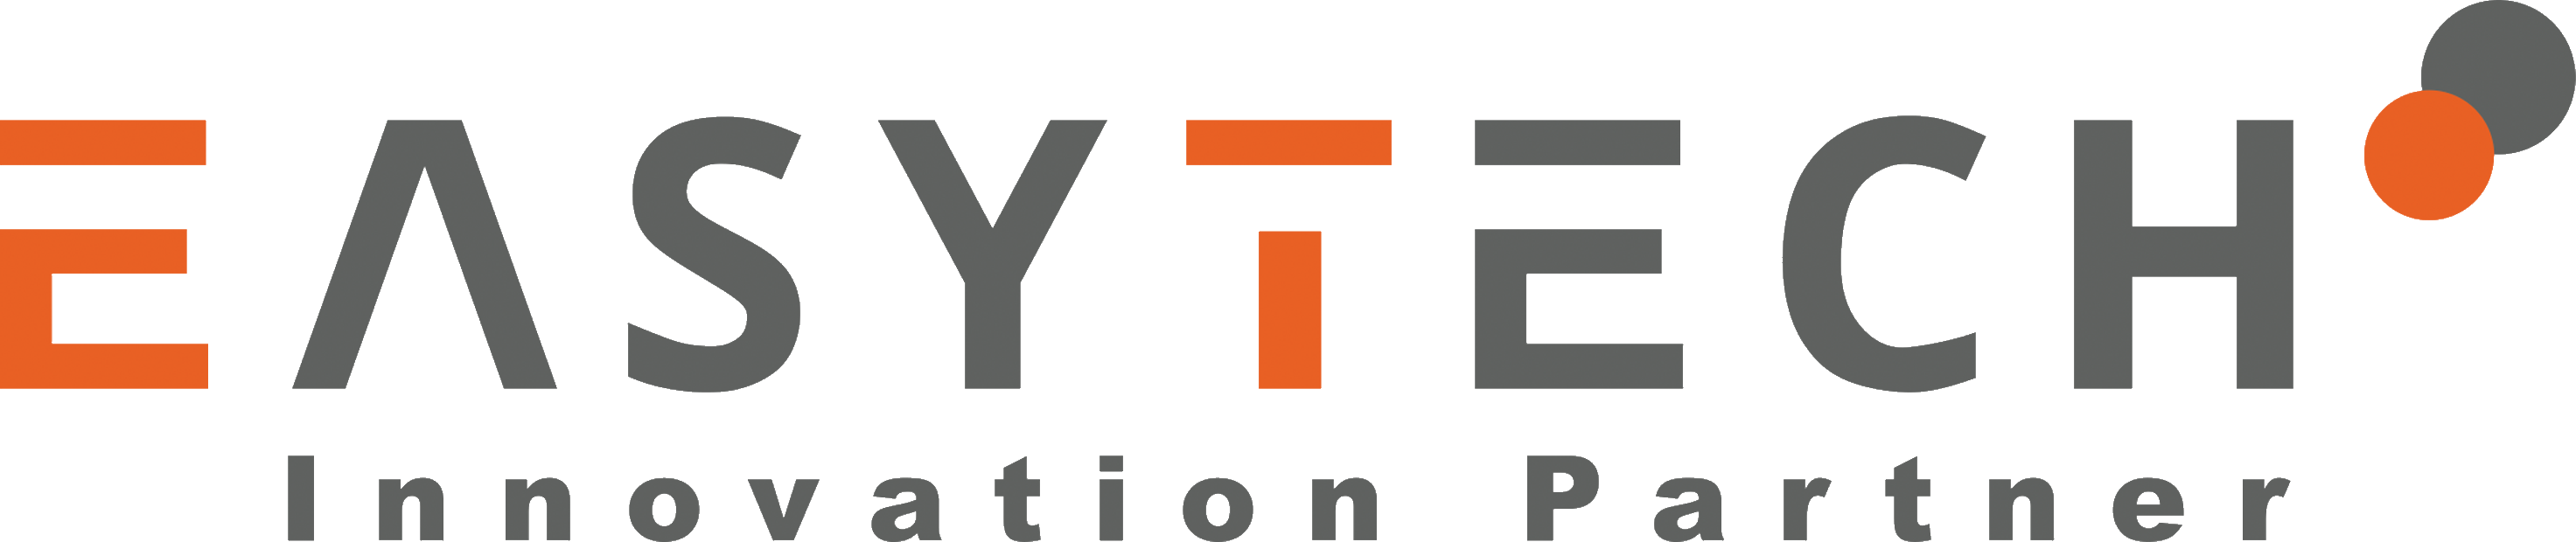 esay tech logo